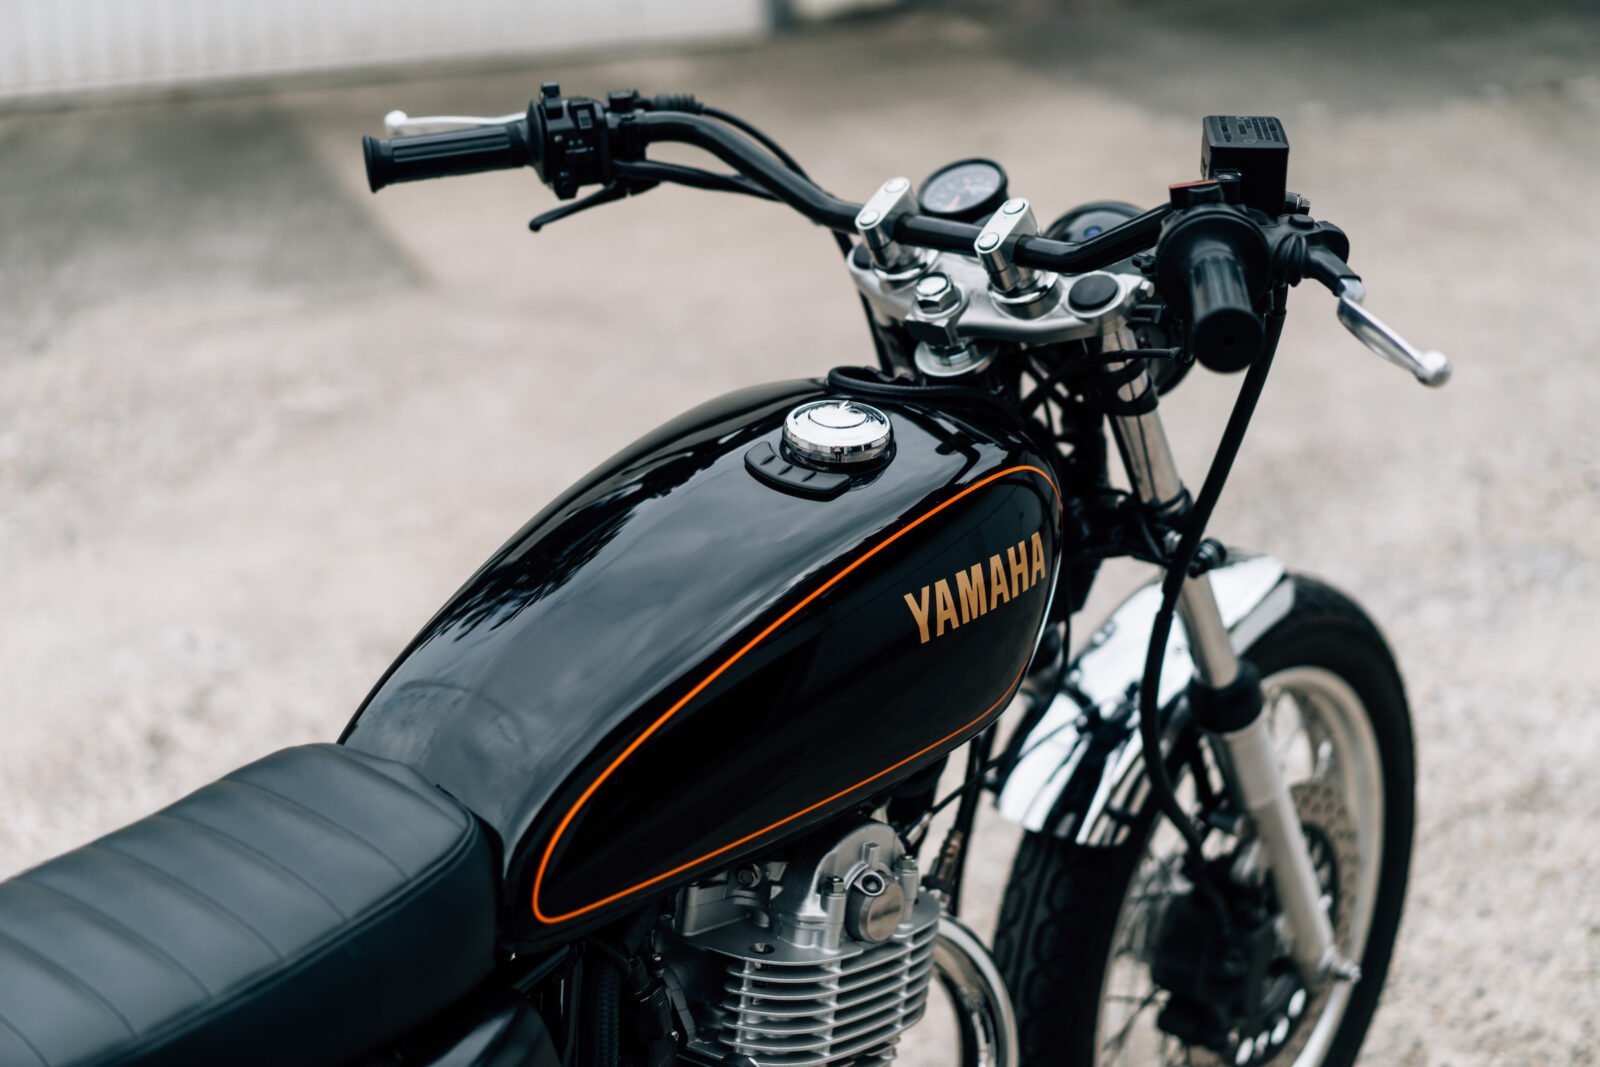 The Toma Customs Yamaha SR400 - A Minimalist Daily Rider